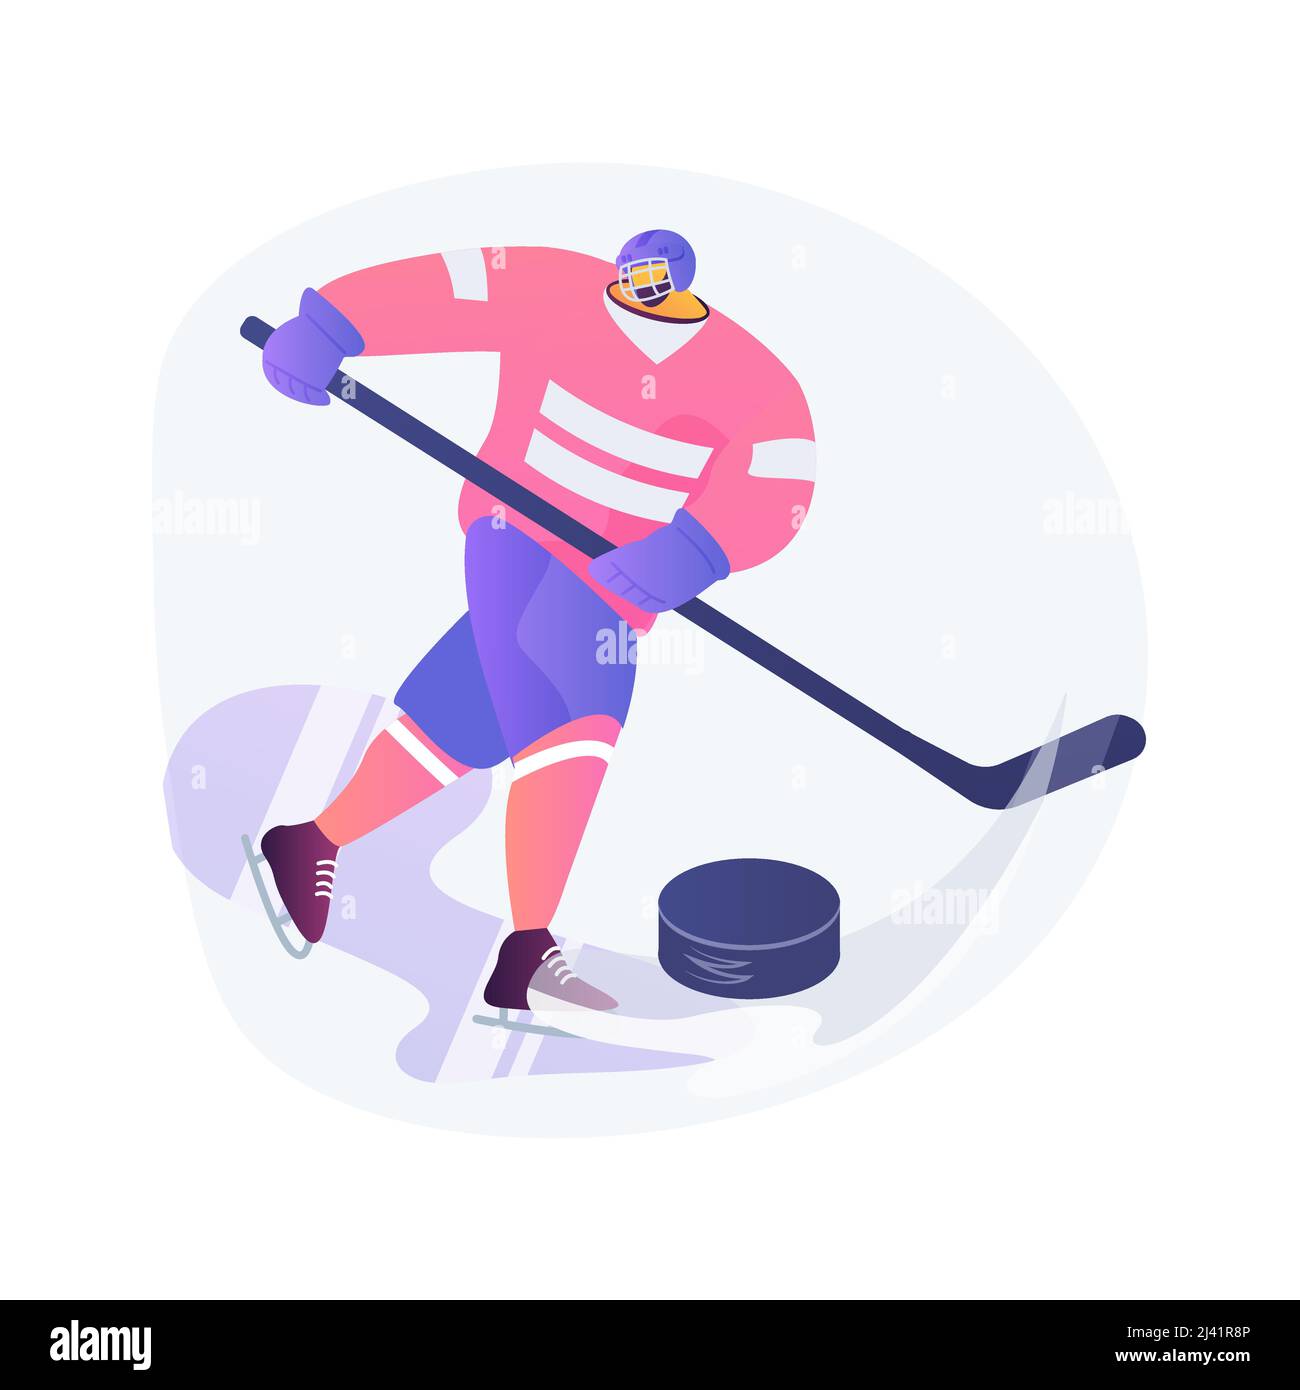 Ice Hockey abstract concept vector illustration. Ice sports equipment, professional hockey club, world championship, team training, watch tournament l Stock Vector